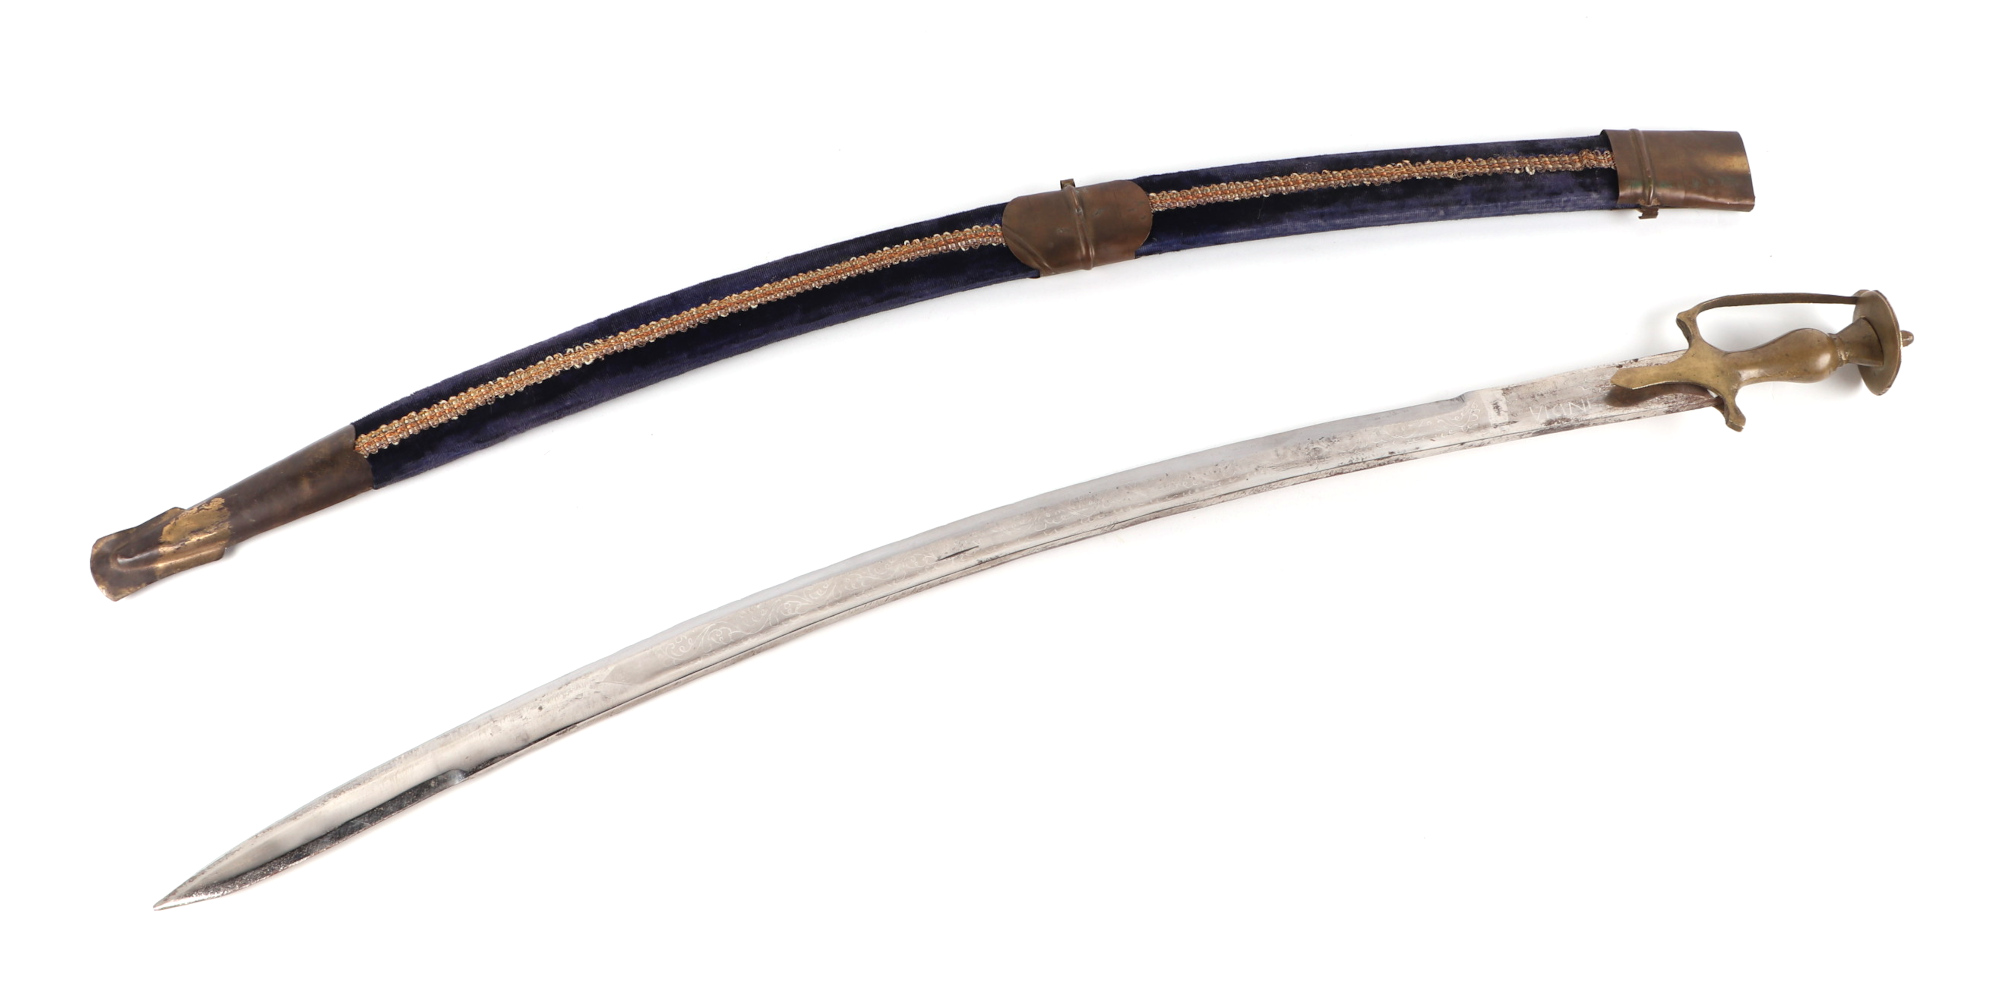 An Indian shamshir type modern sword, with engraved steel blade, brass hilt and velvet covered